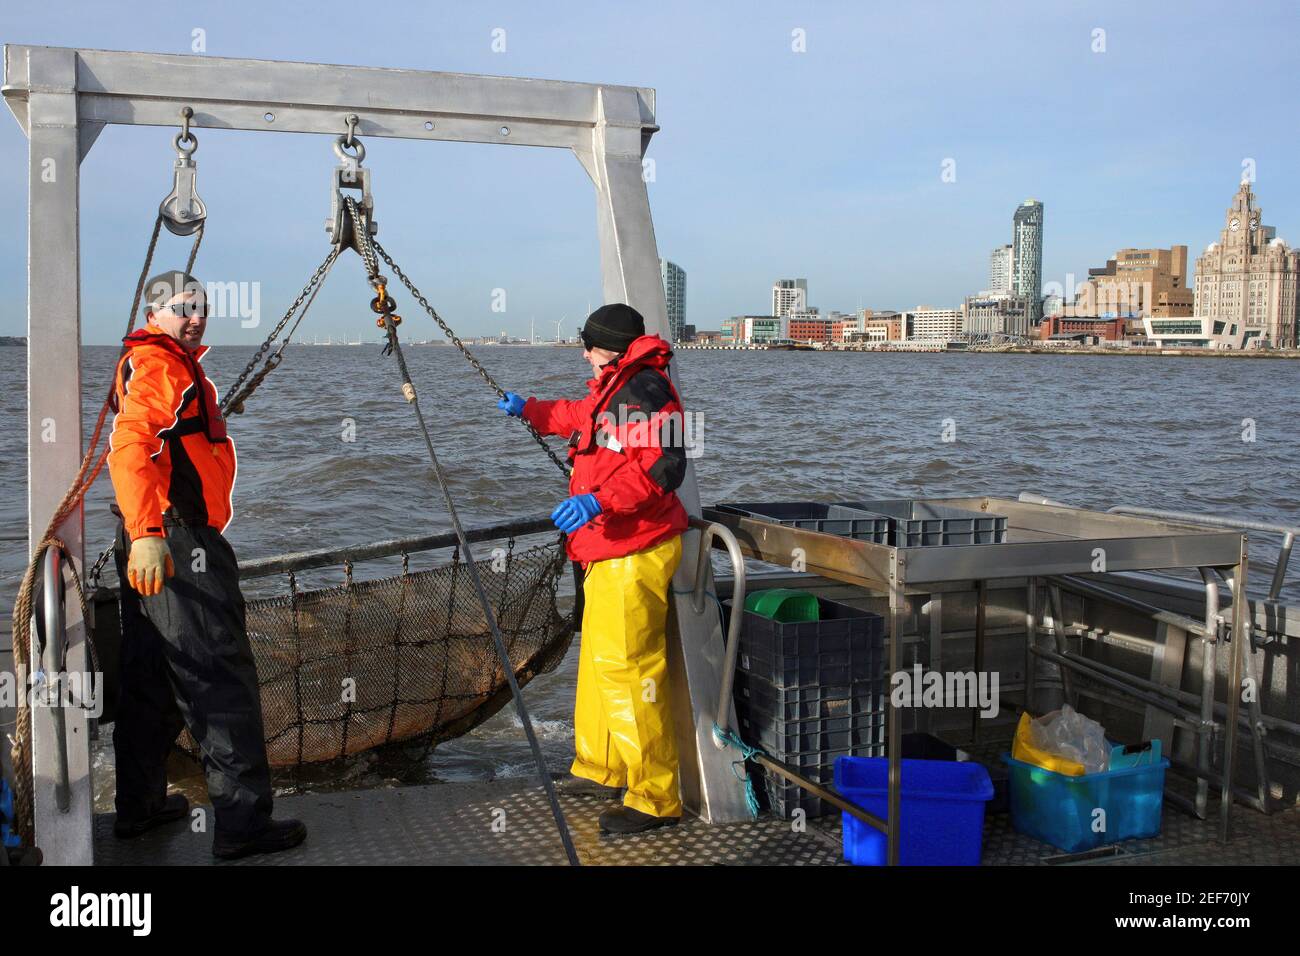 Meereswissenschaftler Beam-Trawling für Benthosorganismen im Fluss Mersey neben Liverpool Waterfront, Großbritannien Stockfoto